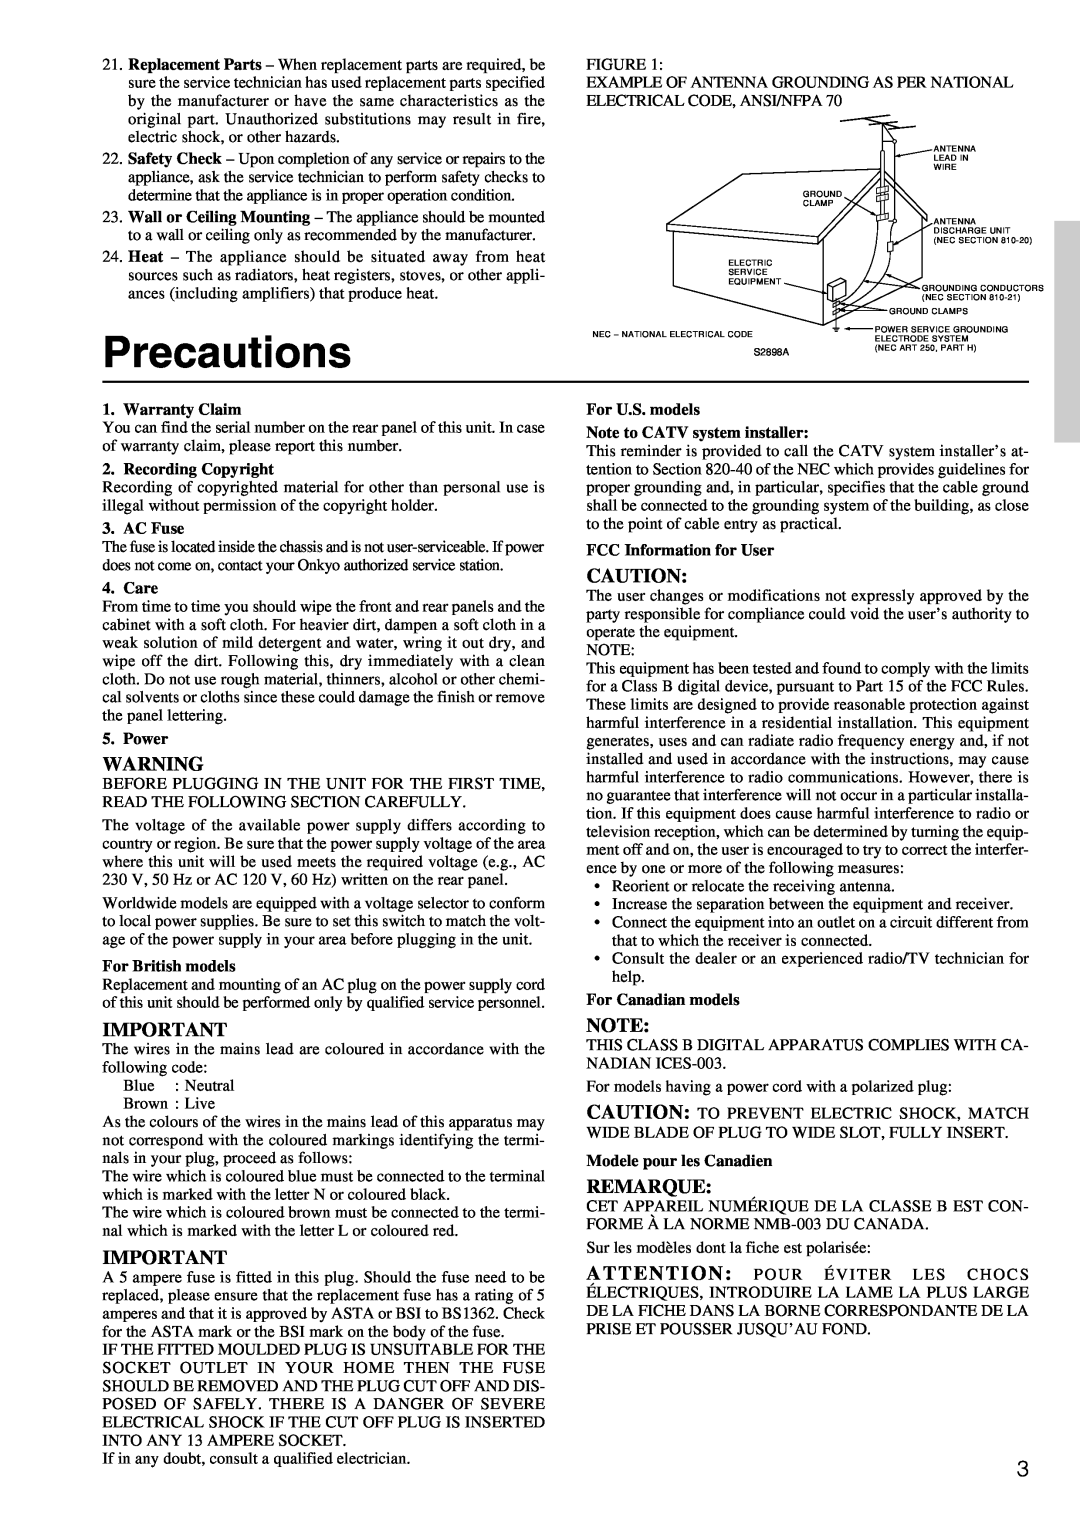 Onkyo TX-DS696 appendix Precautions, Remarque 